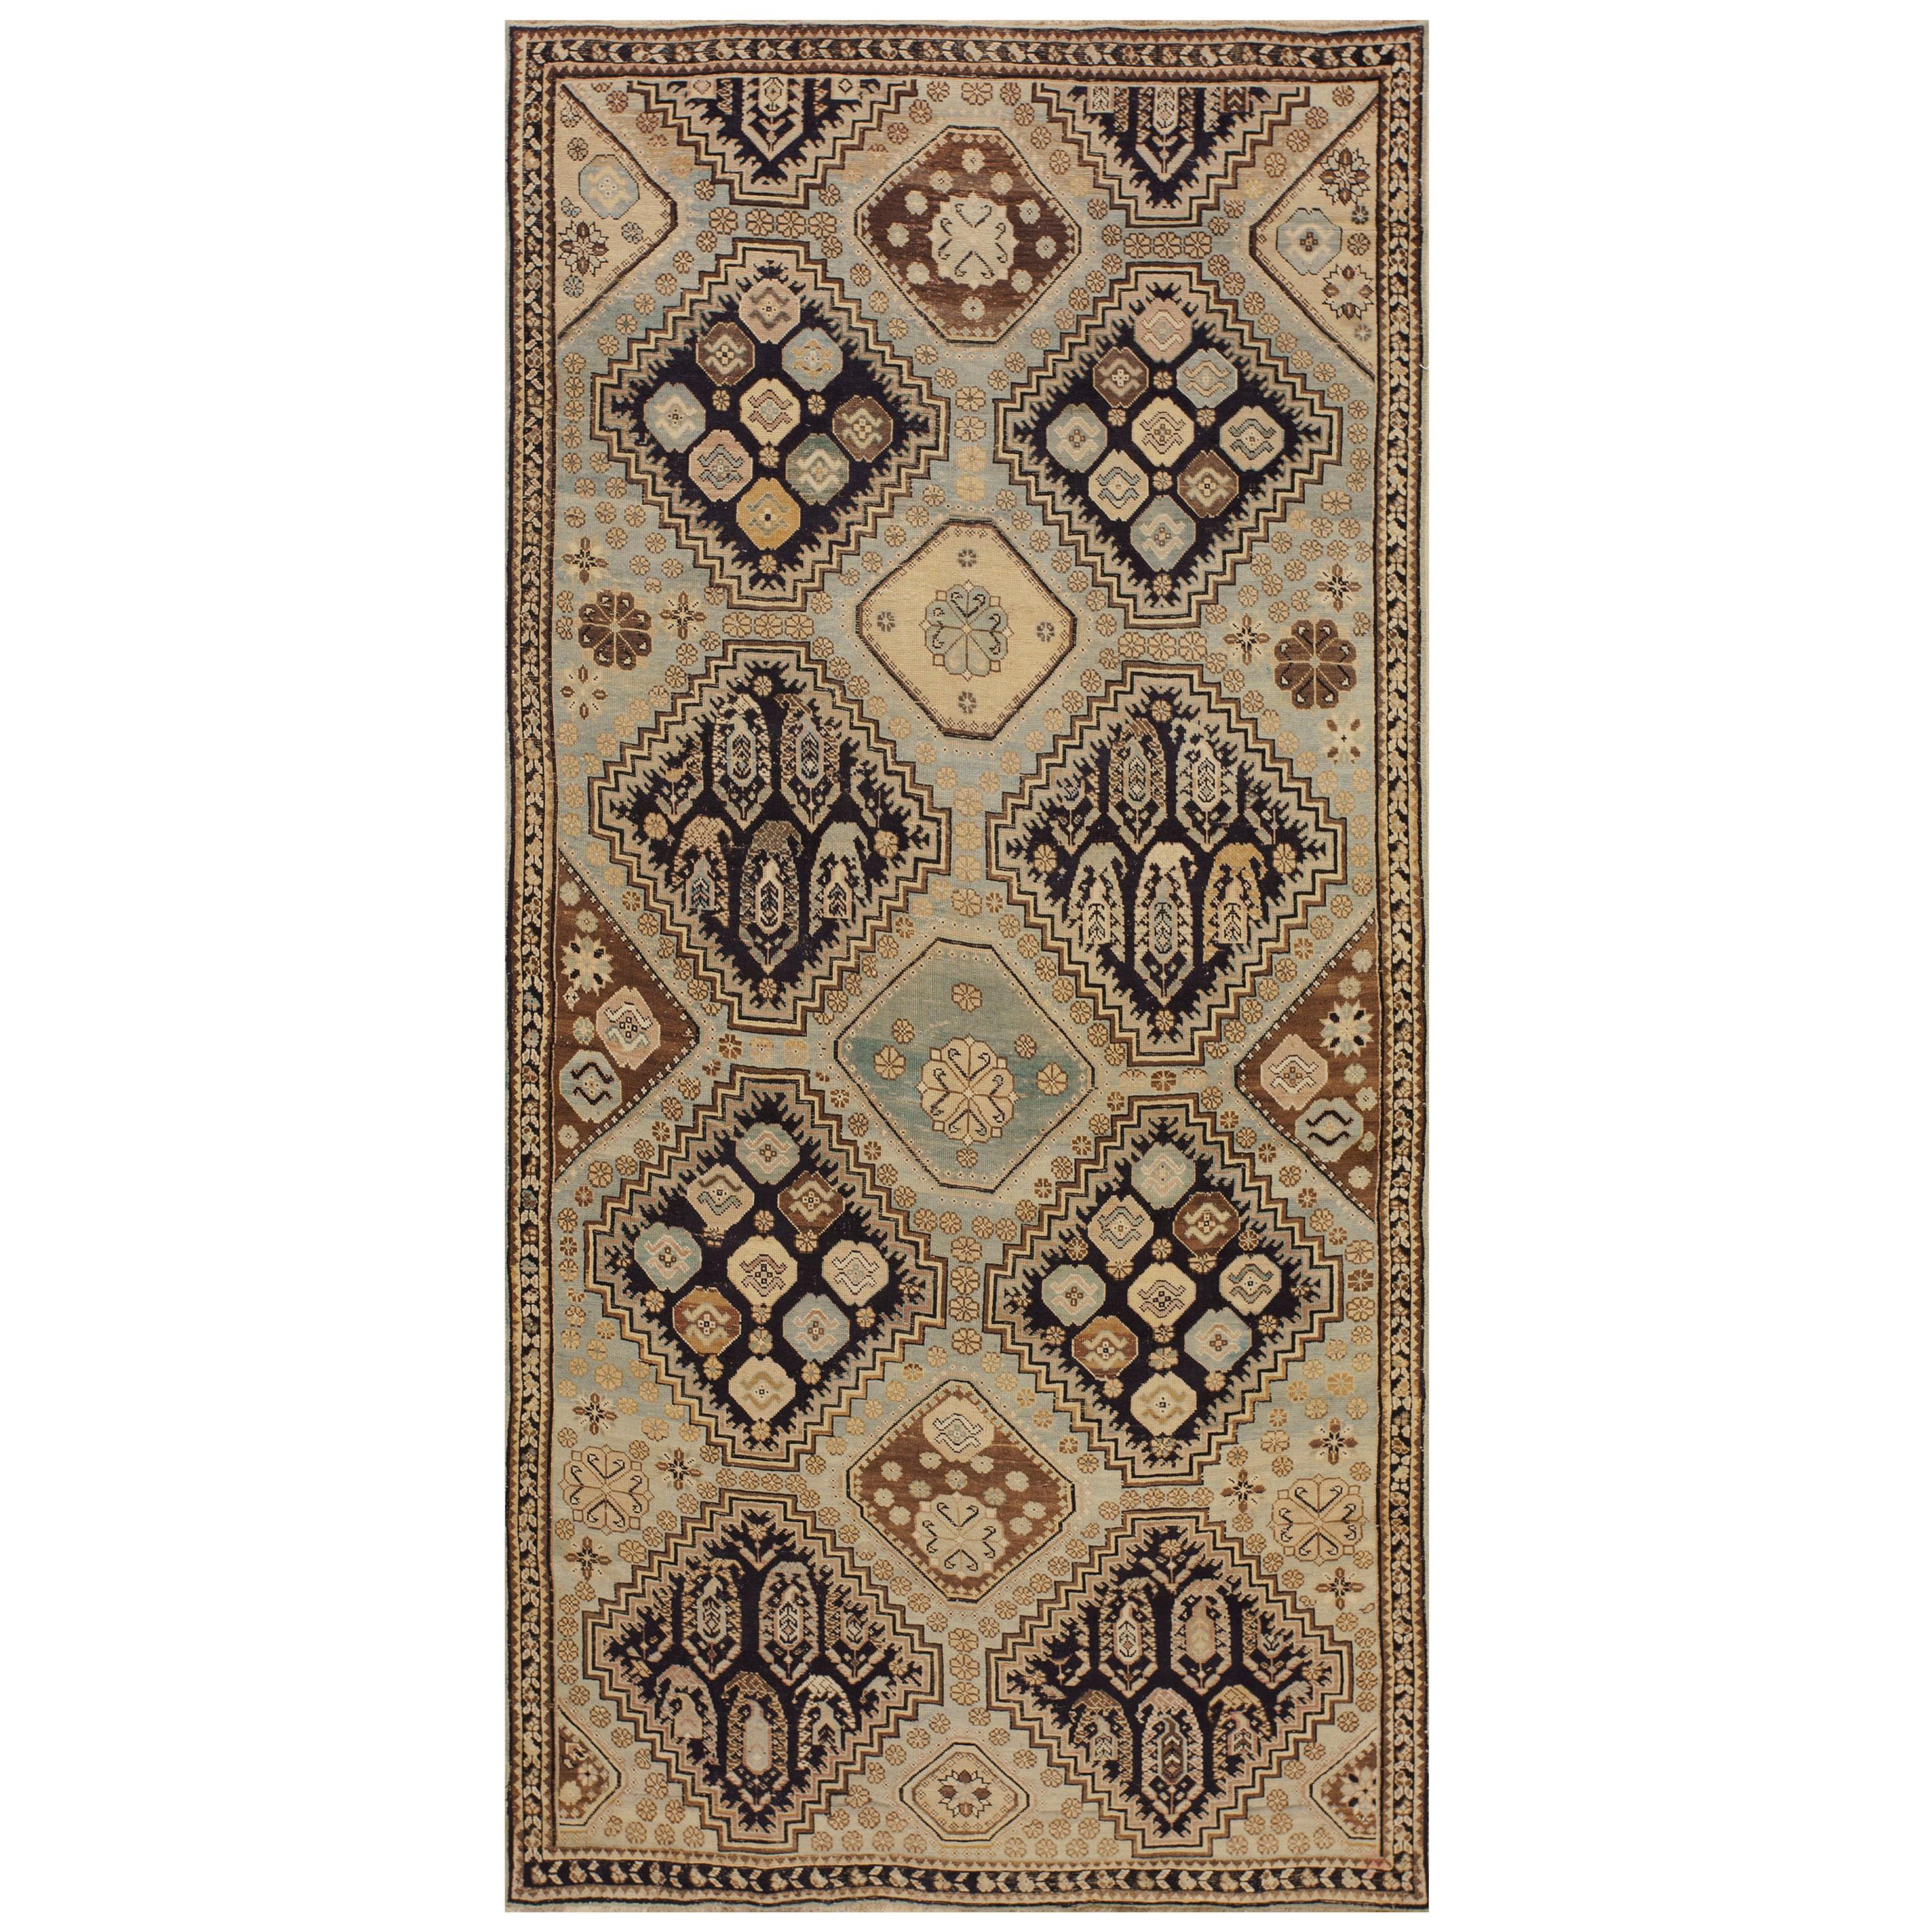 19th Century Caucasian Baku Carpet ( 4'4" x 8'8" - 133 x 265 cm ) 